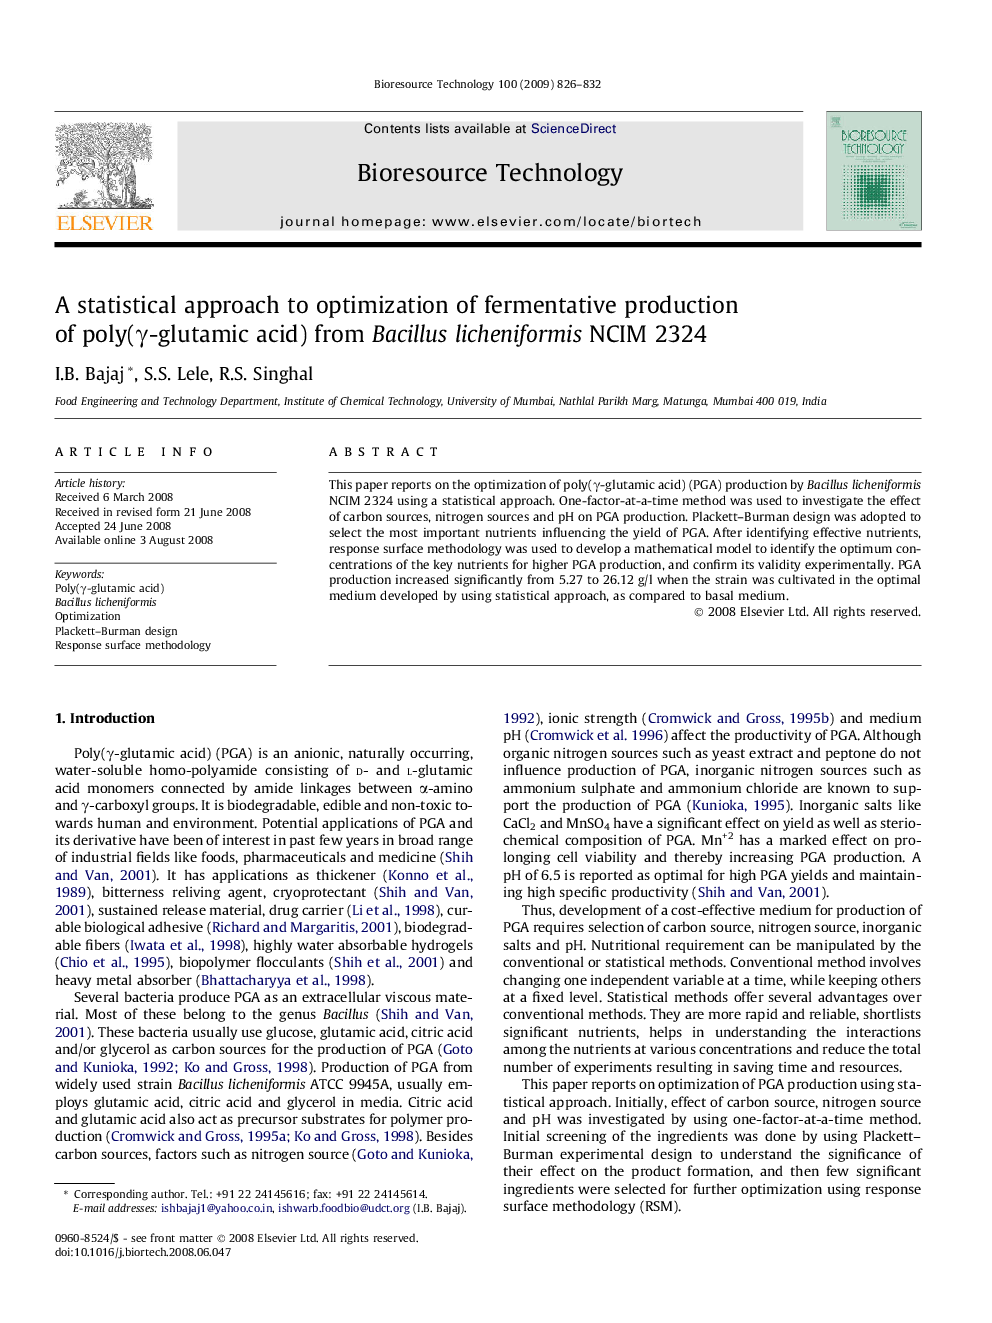 A statistical approach to optimization of fermentative production of poly(γ-glutamic acid) from Bacillus licheniformis NCIM 2324